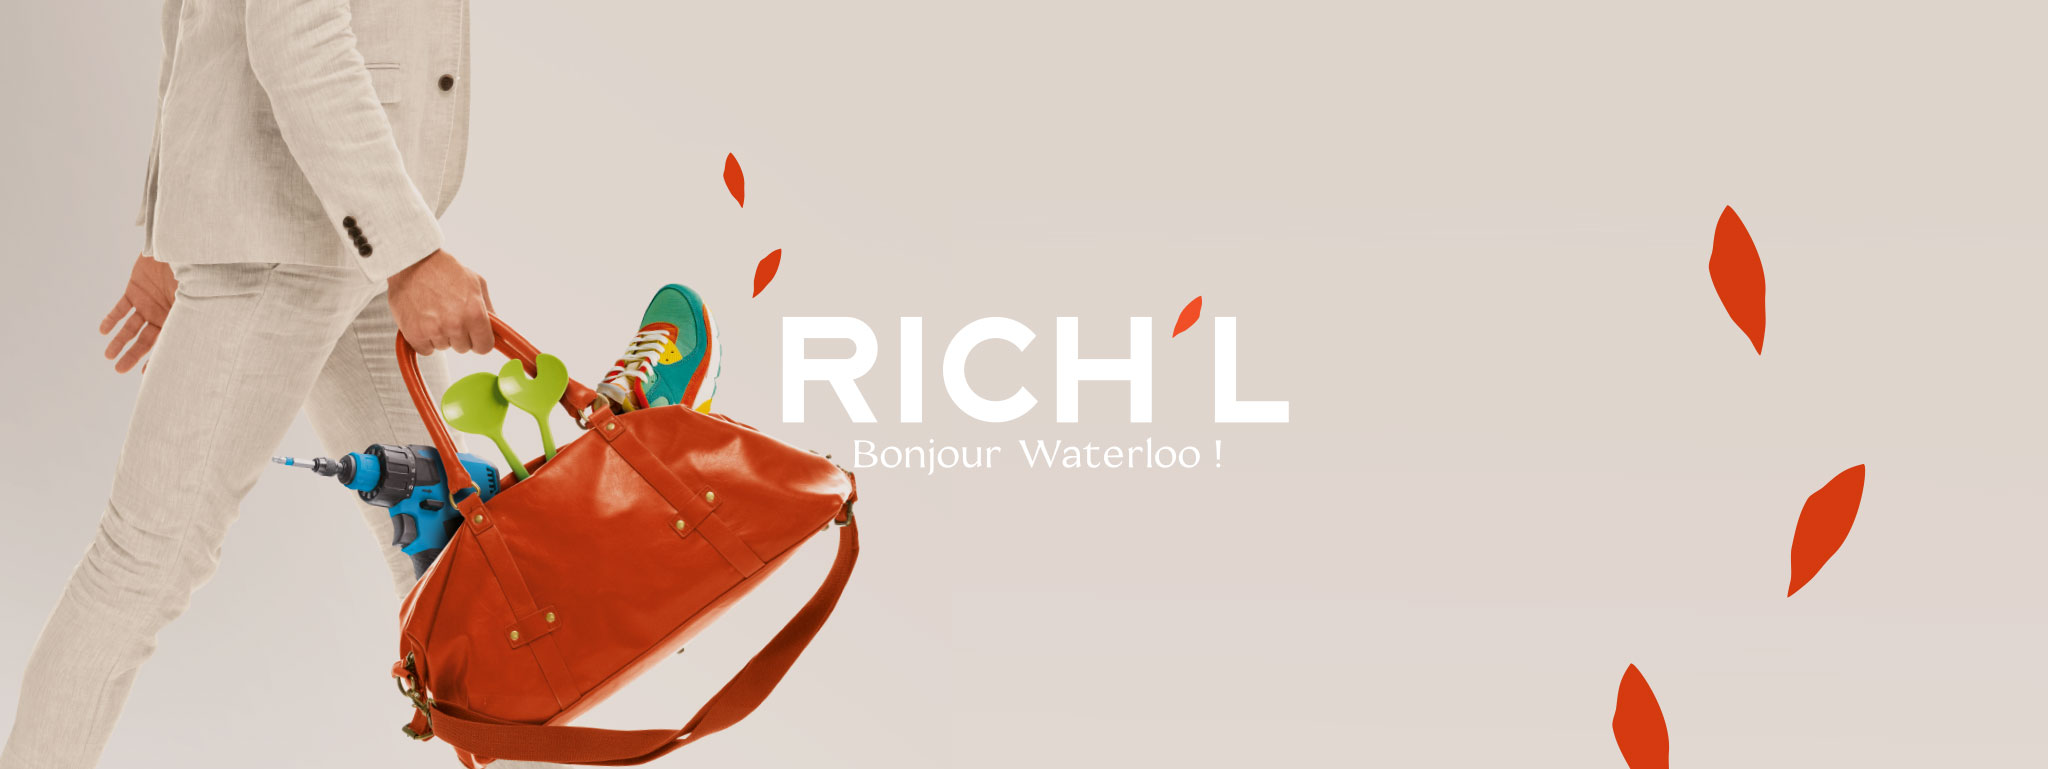 Rich'L banner